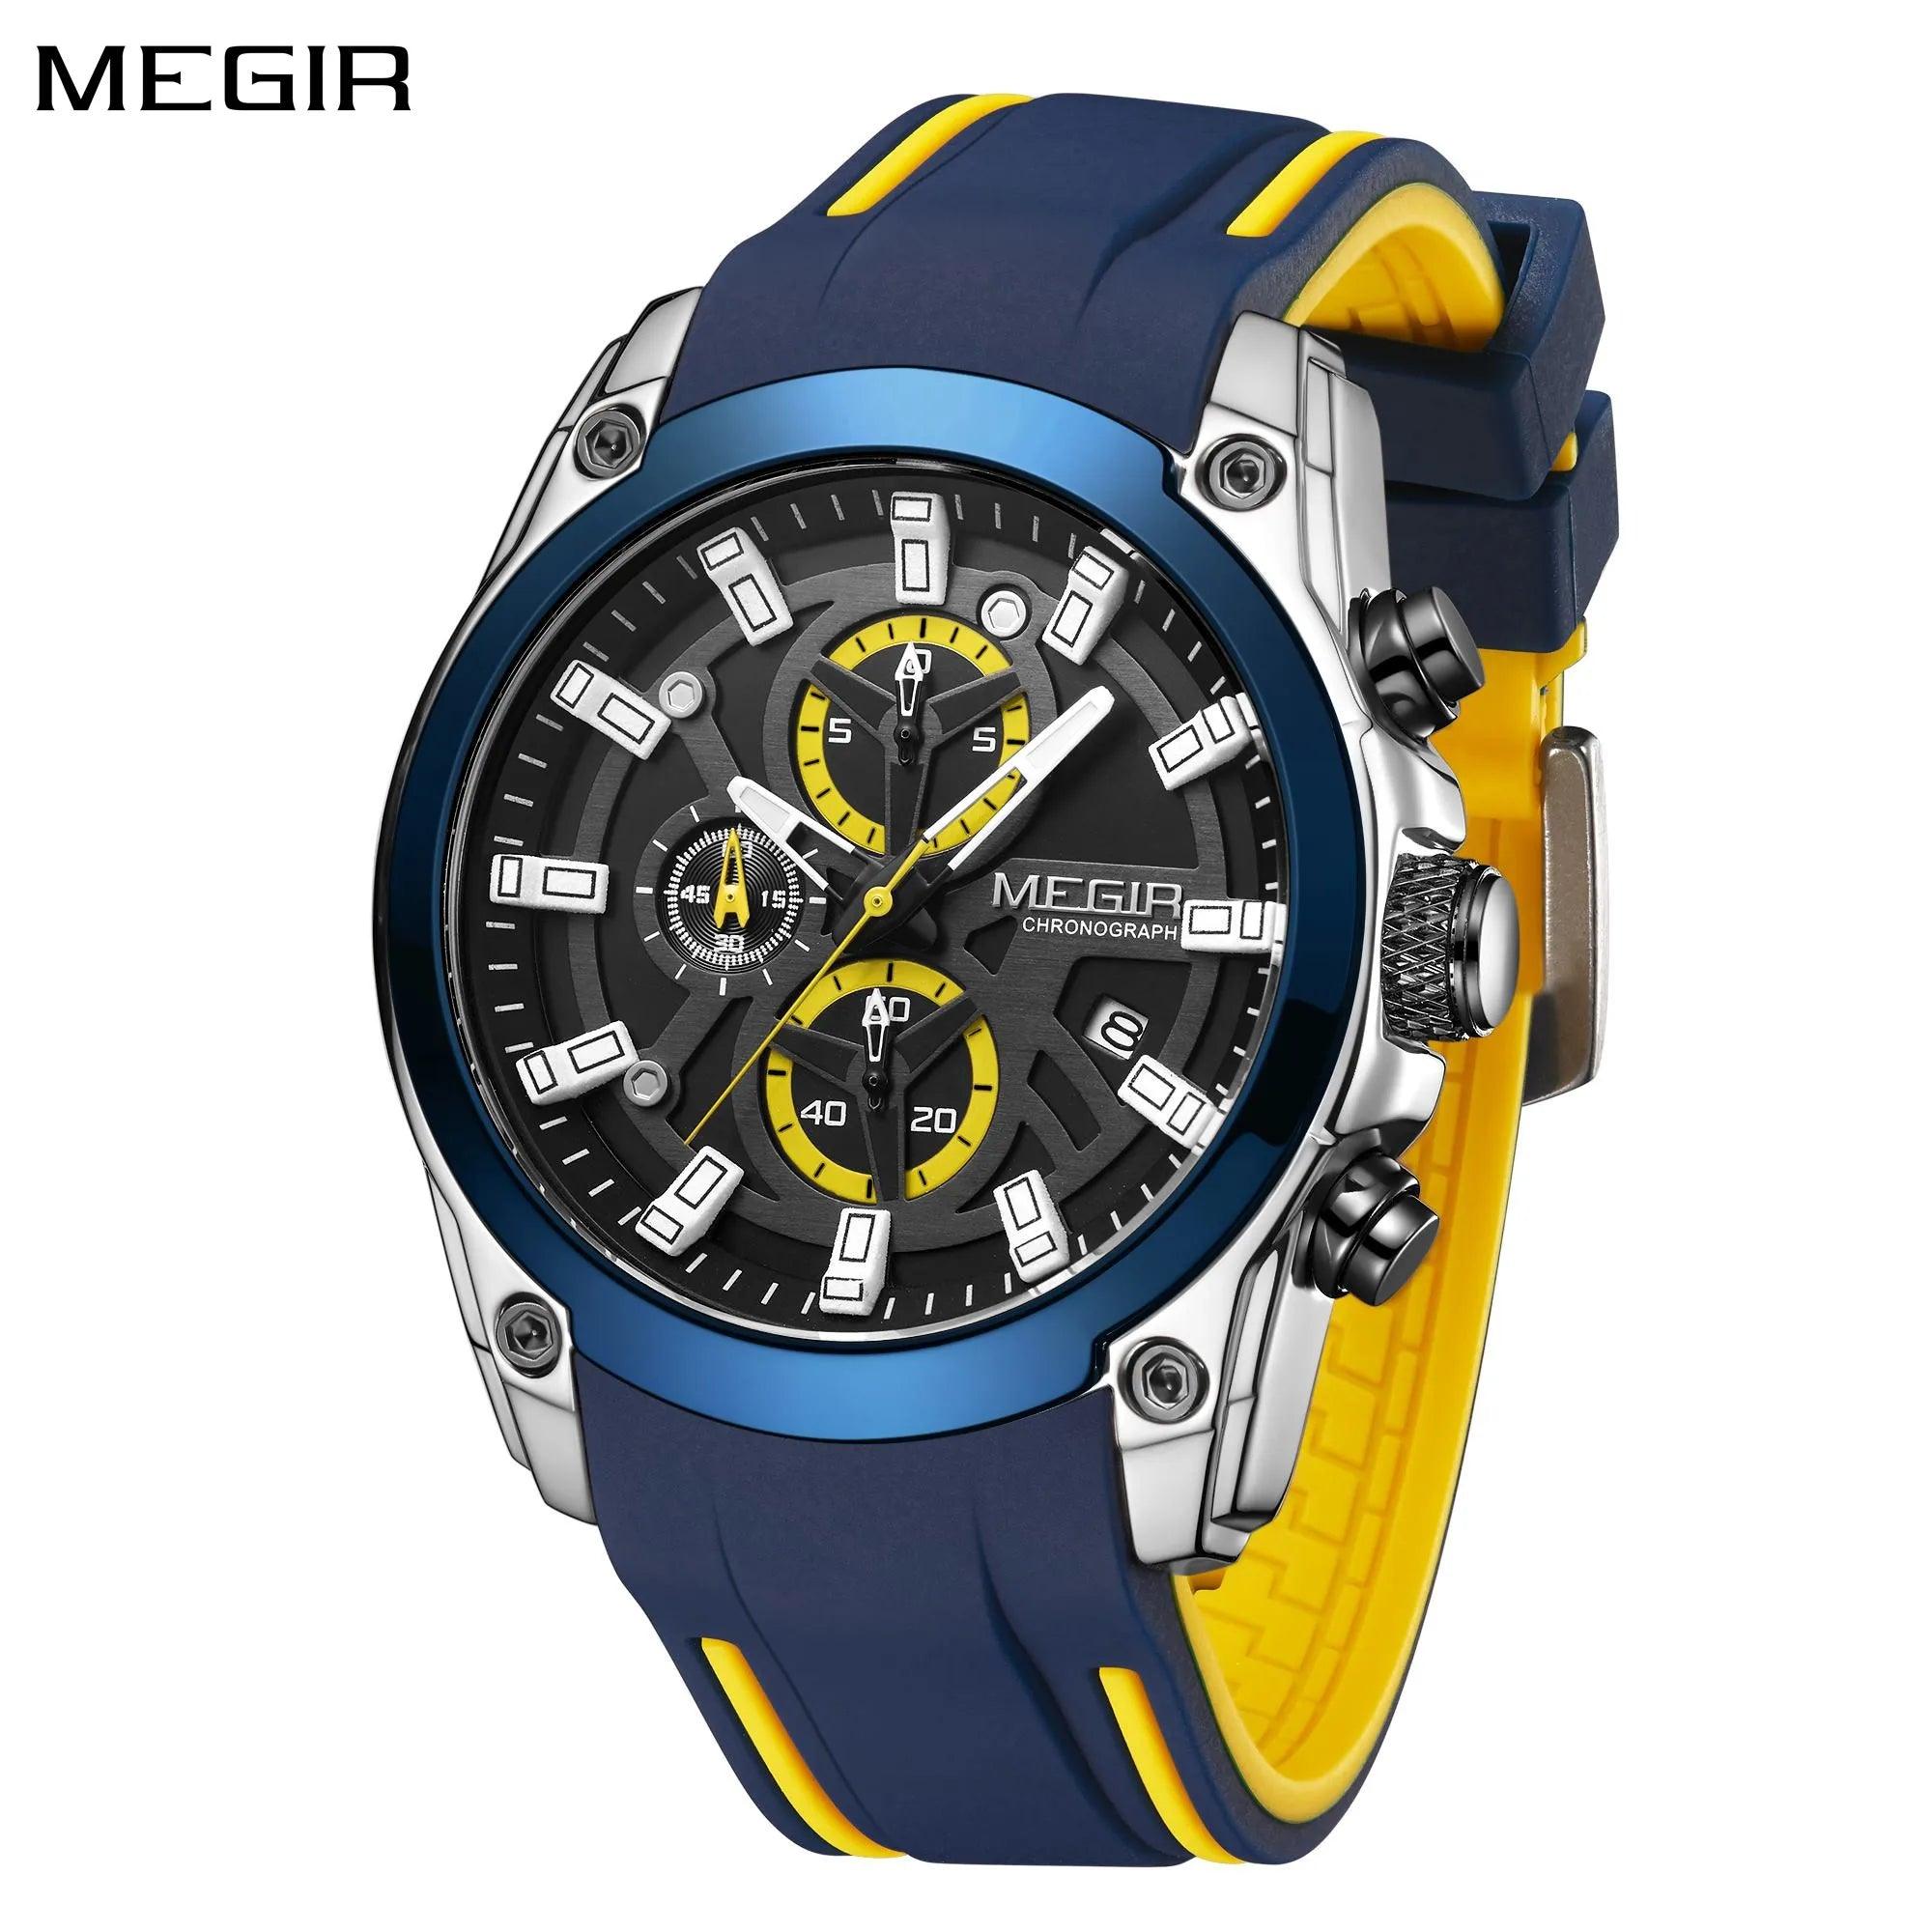 Luxury Sport Watch for Men: MEGIR Chronograph Military Wristwatch with Luminous Display and Calendar Feature  ourlum.com   